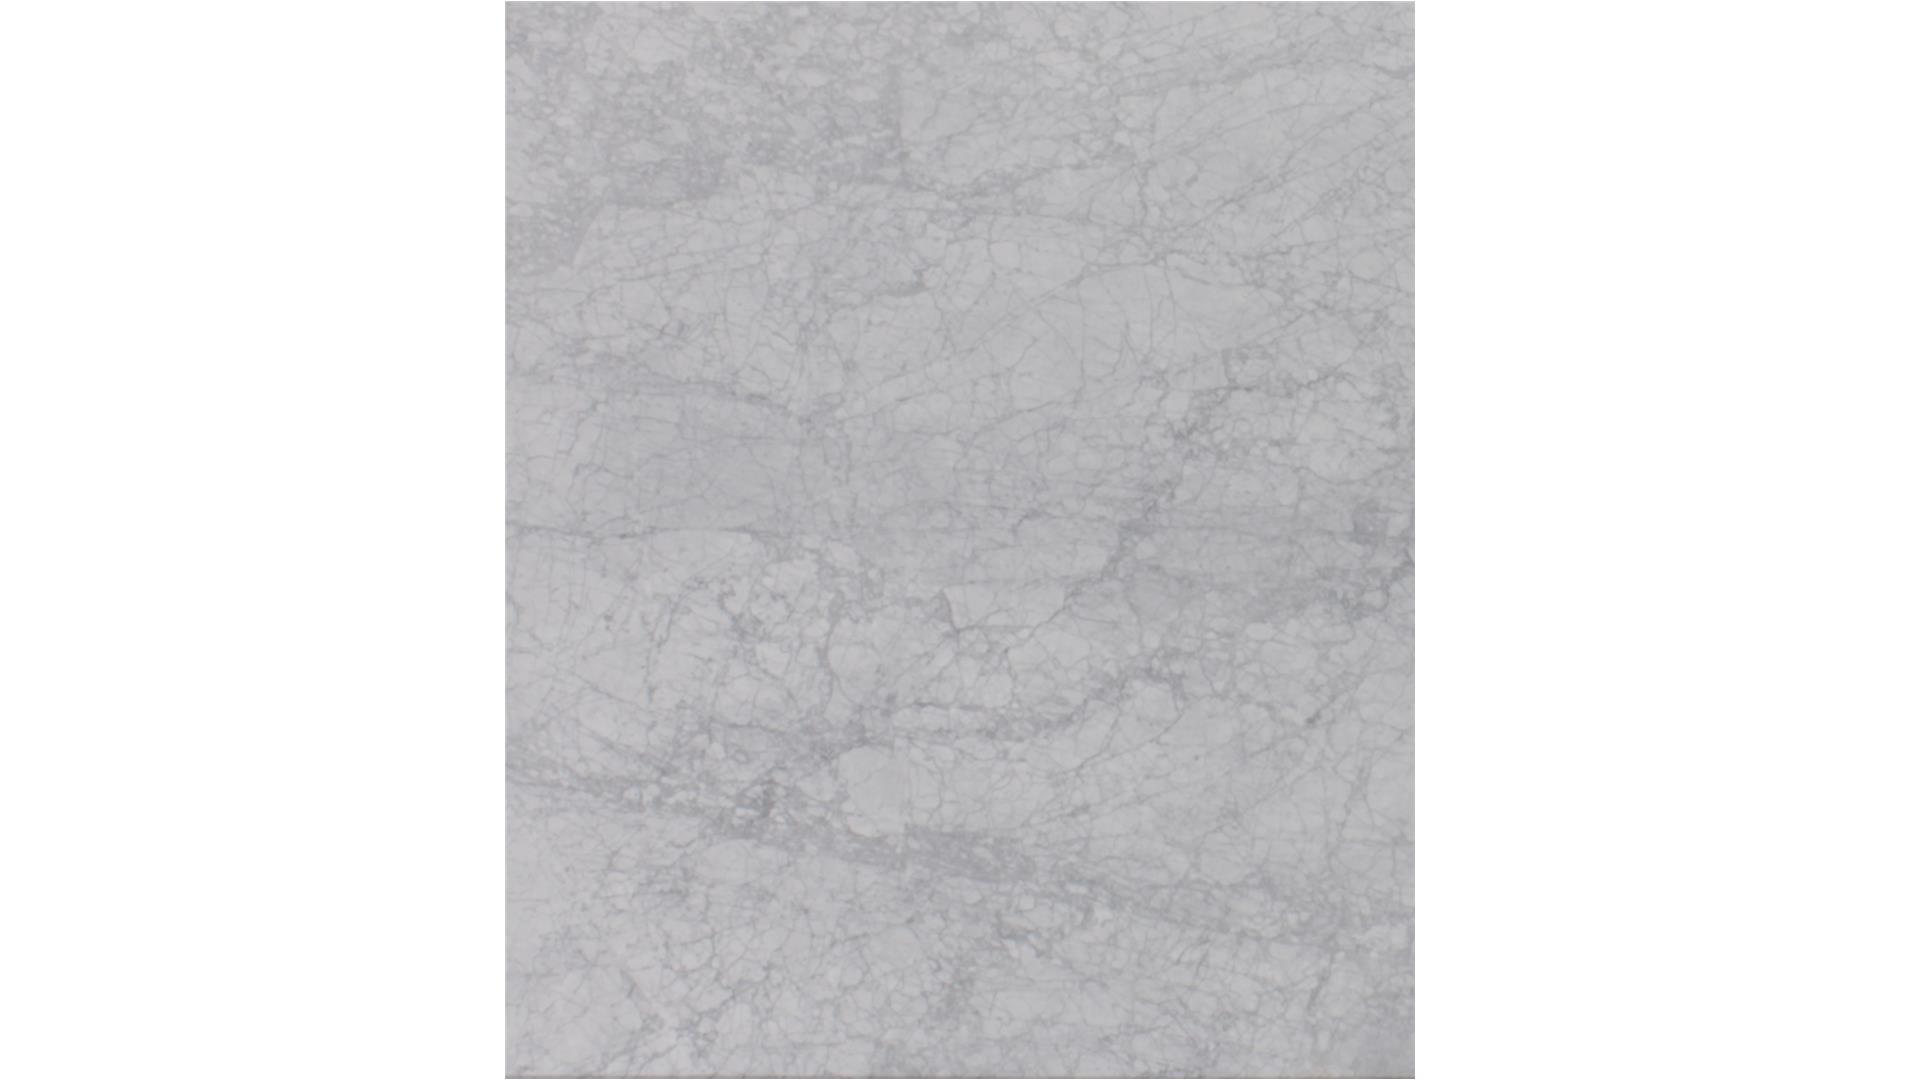 Bianco Carrara Honed Natural Stone Slabs